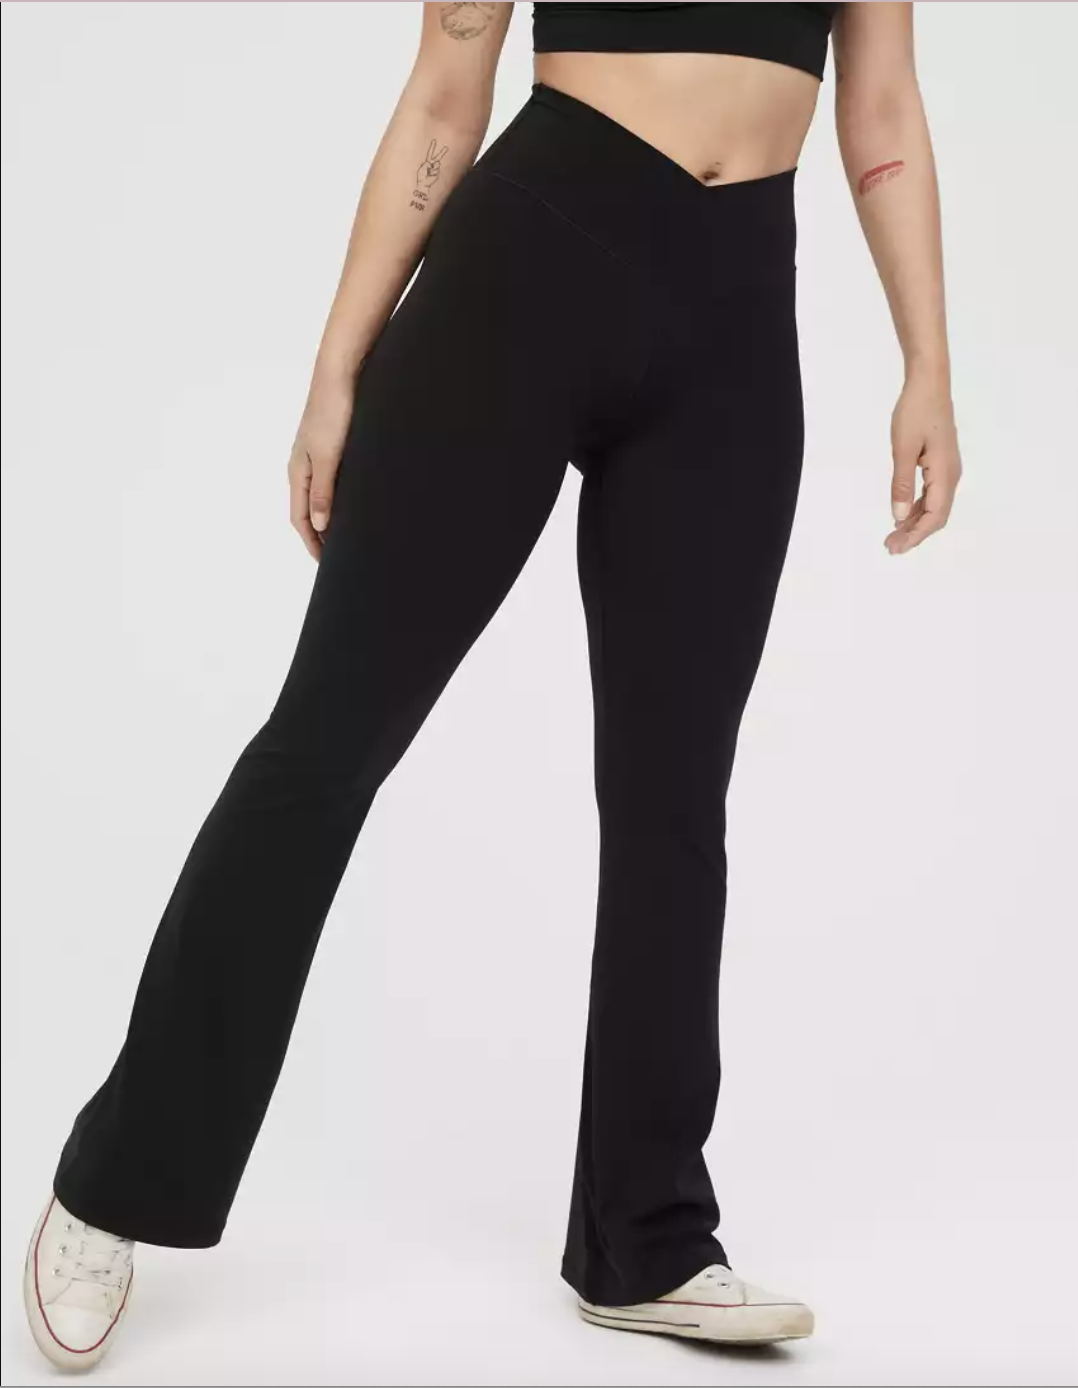 Hot women in yoga pants | Sexy women in yoga pants | 2023